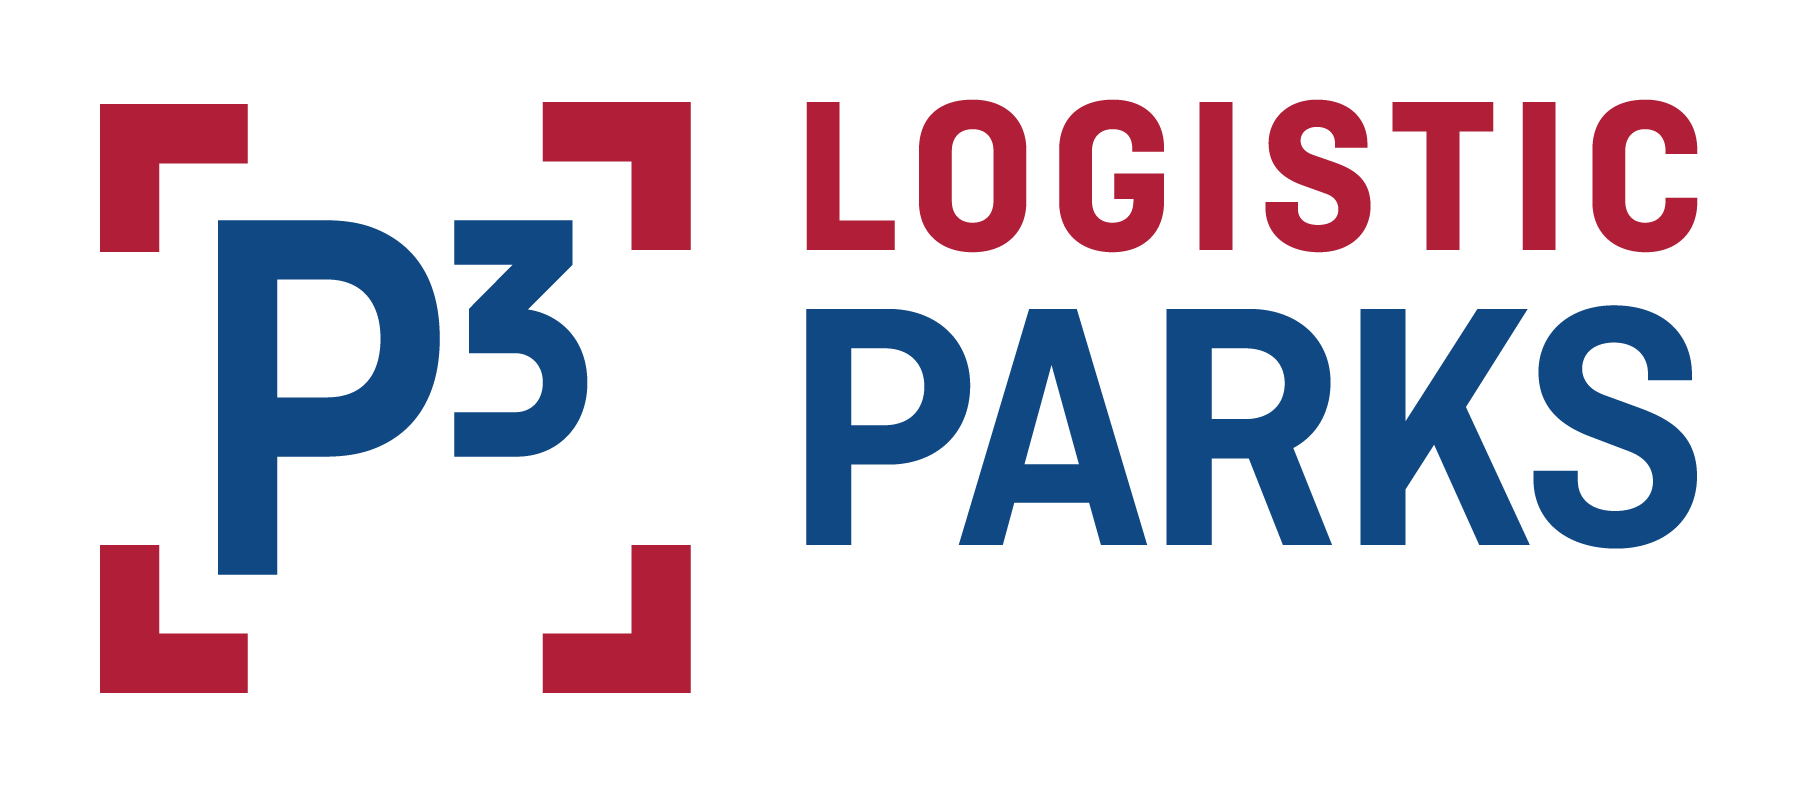 P3 Logistics